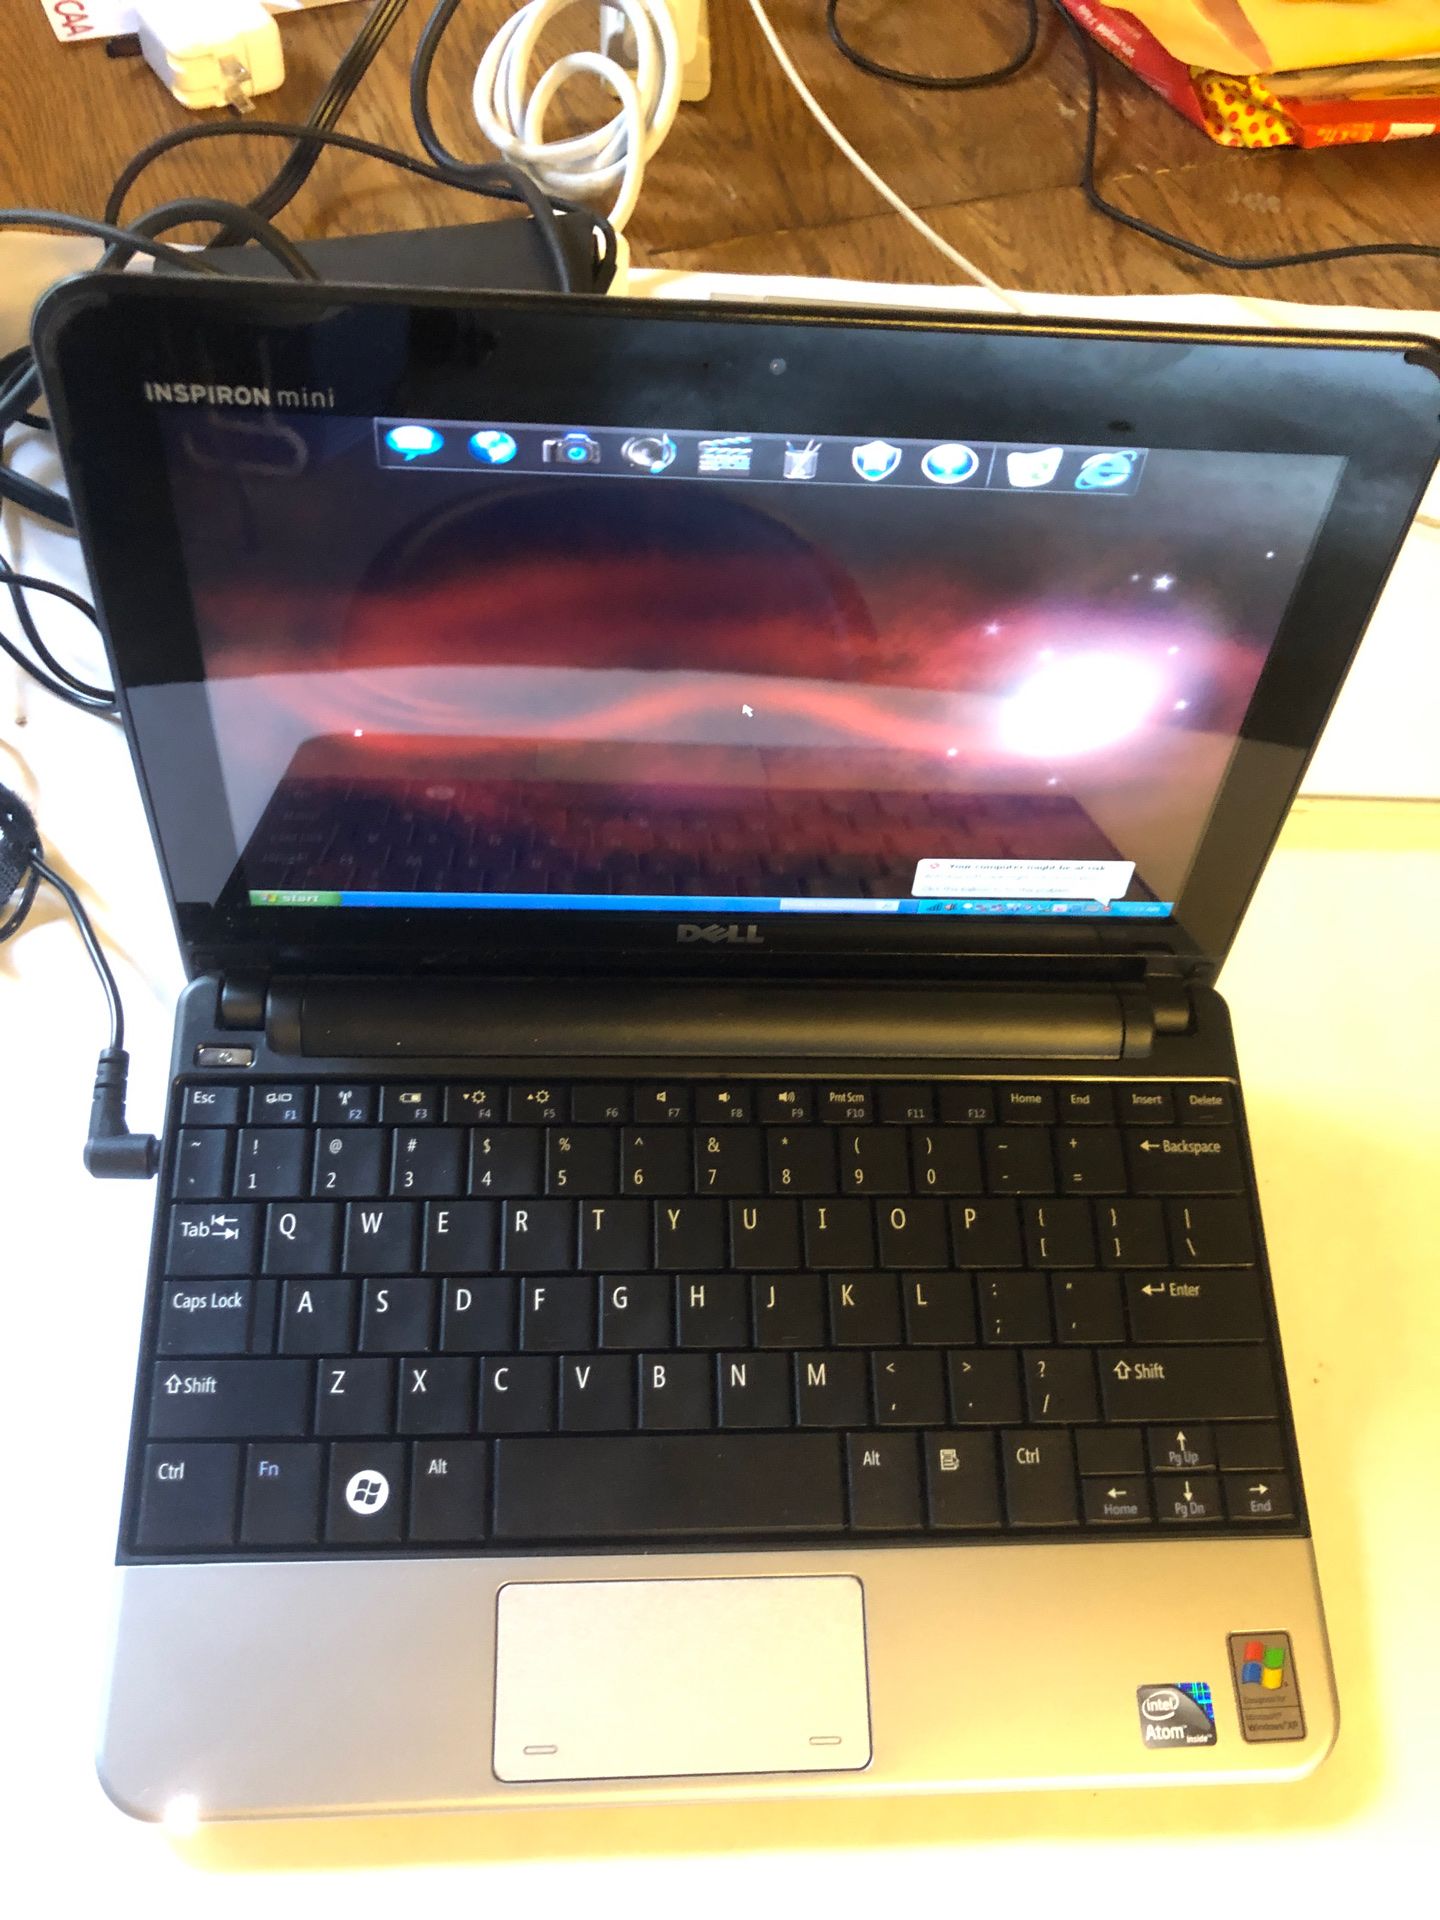 Dell Inspiron mini laptop